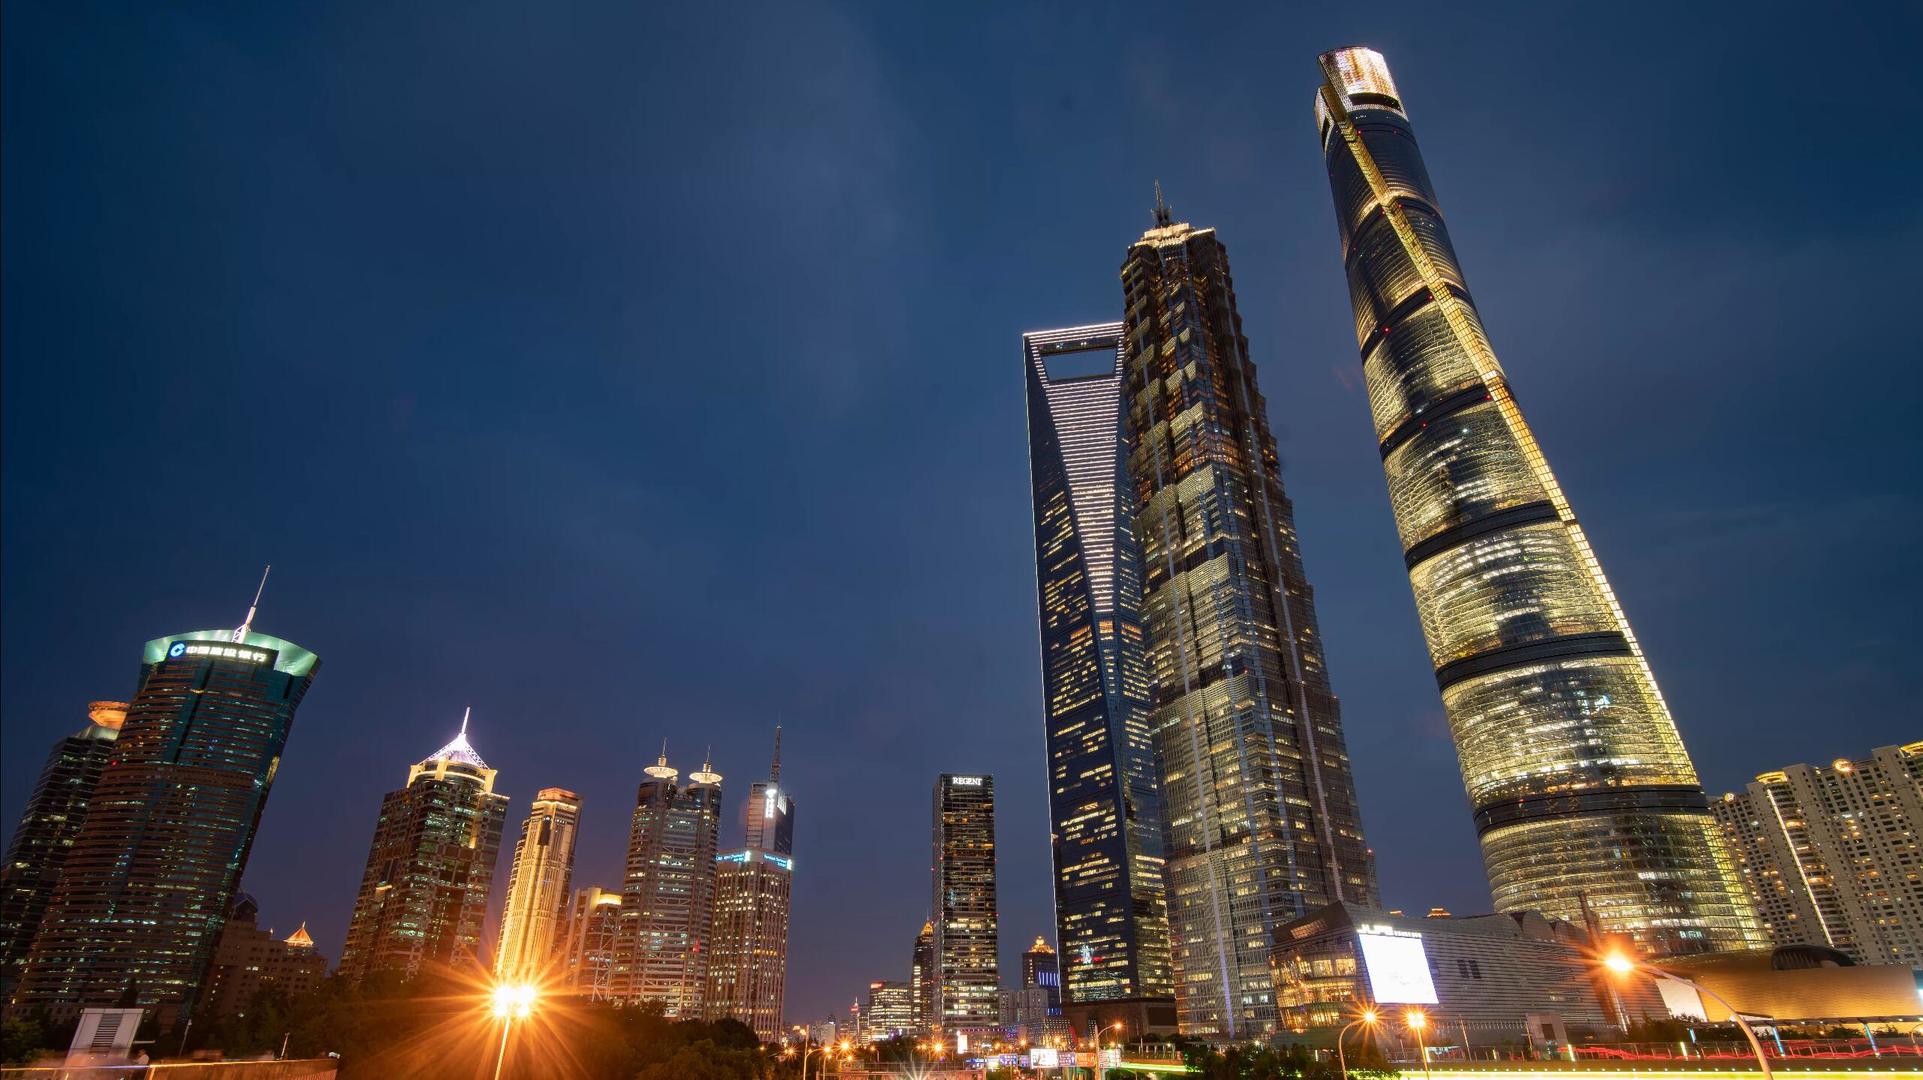 8k上海陆家嘴城市地标建筑金融中心夜景延时视频的预览图